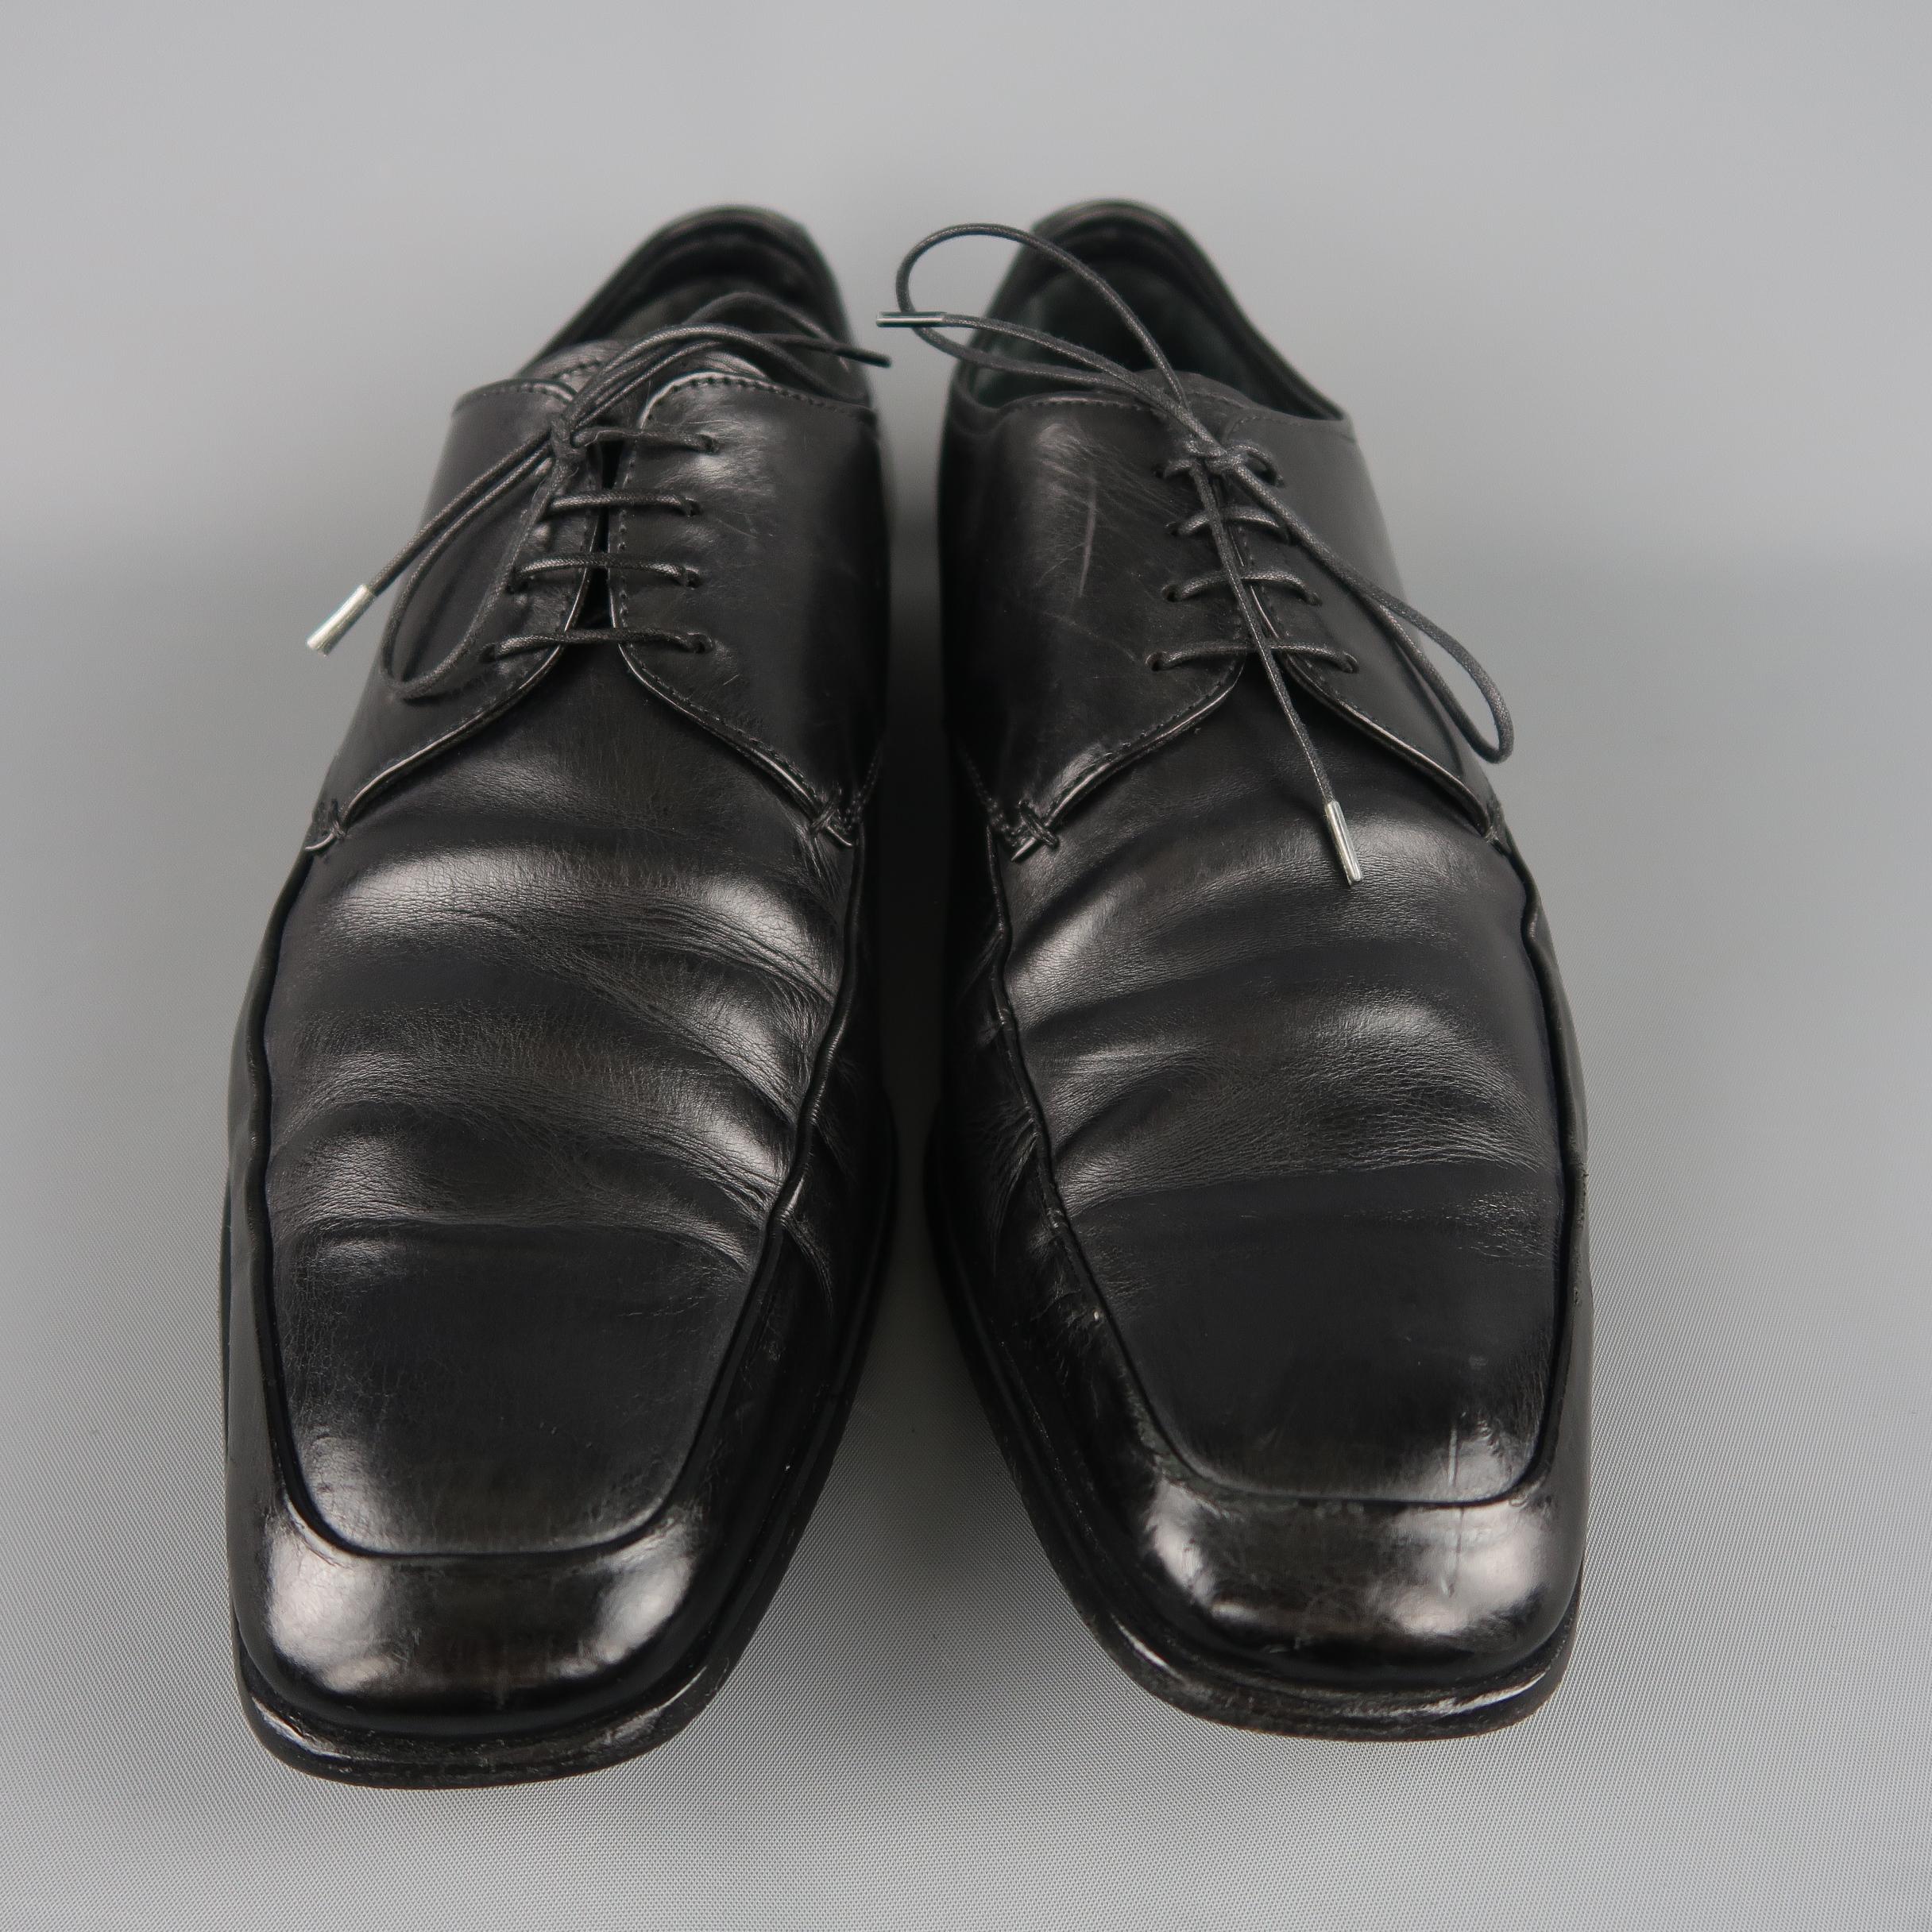 Men's Prada Dress Shoes - Black Leather Apron Toe Lace Up 